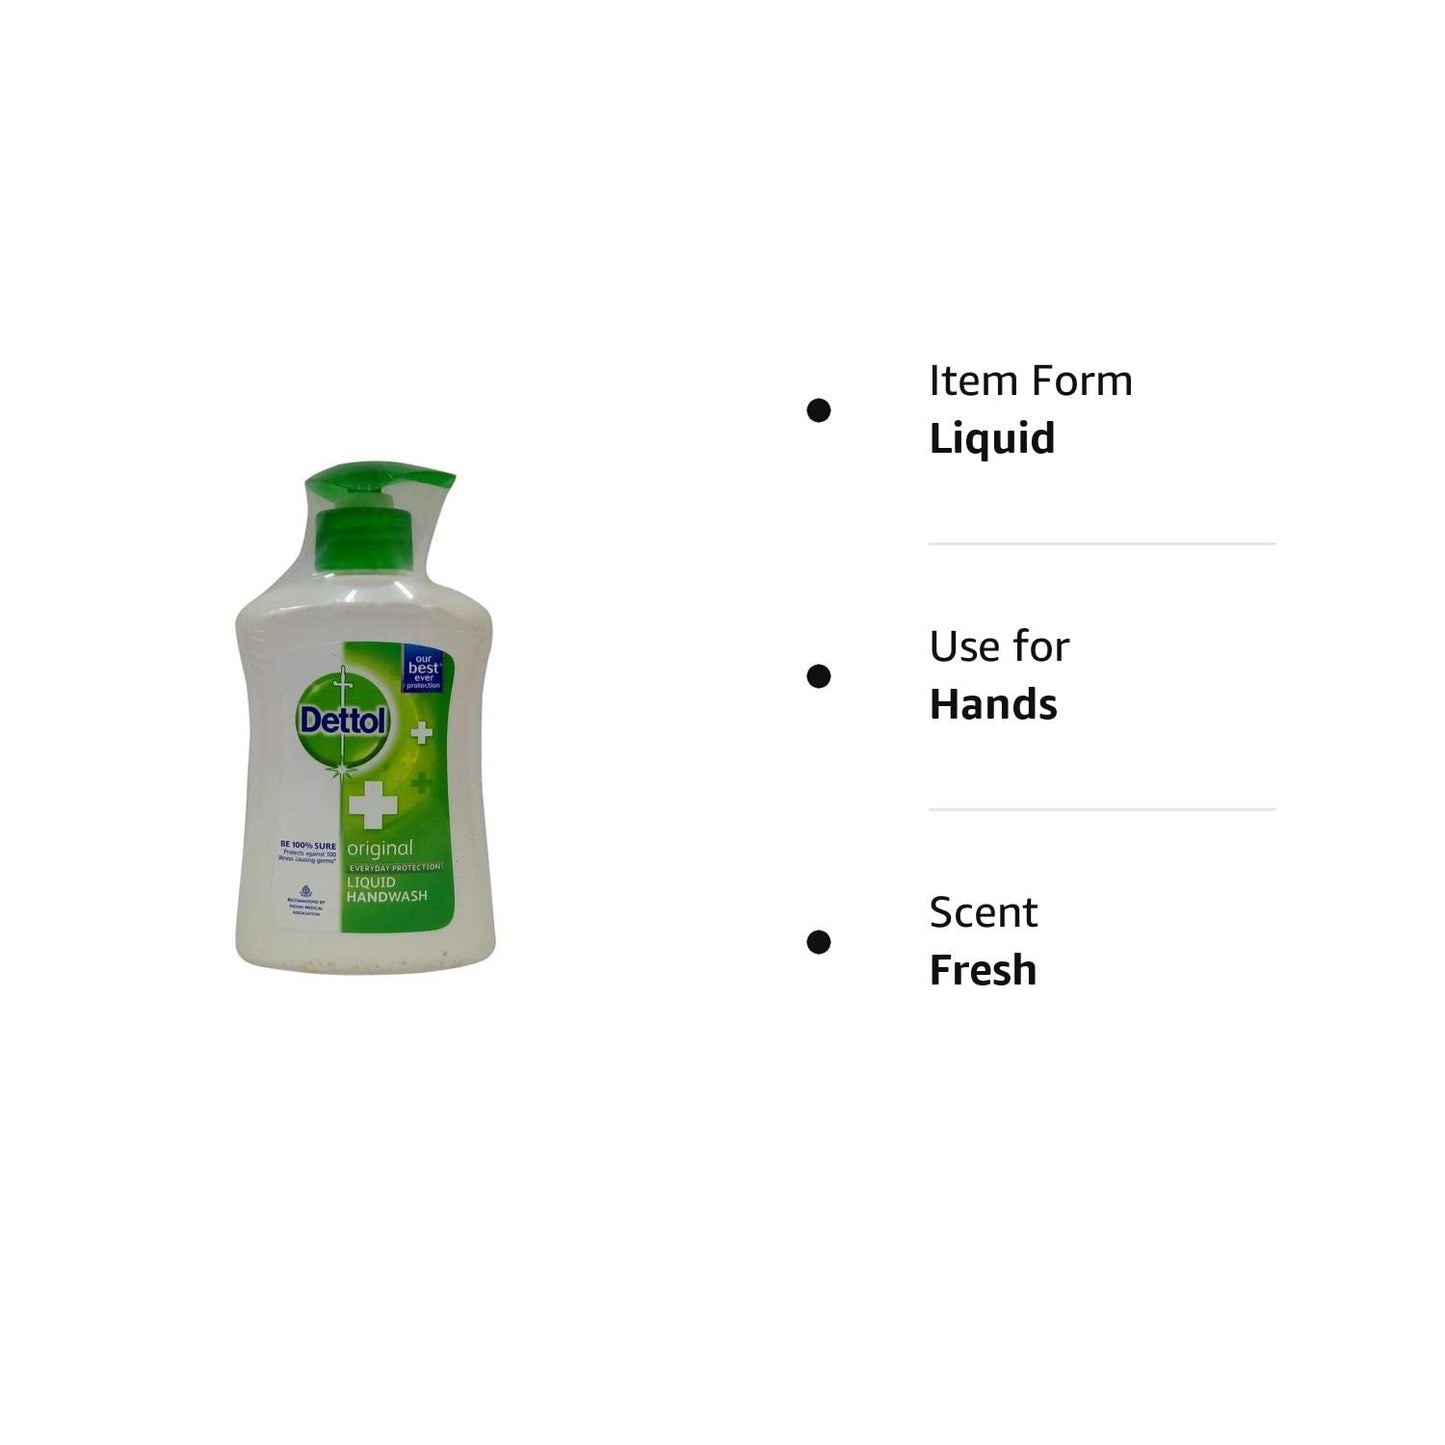 Dettol Liquid Hand Wash - Original, 200ml Bottle